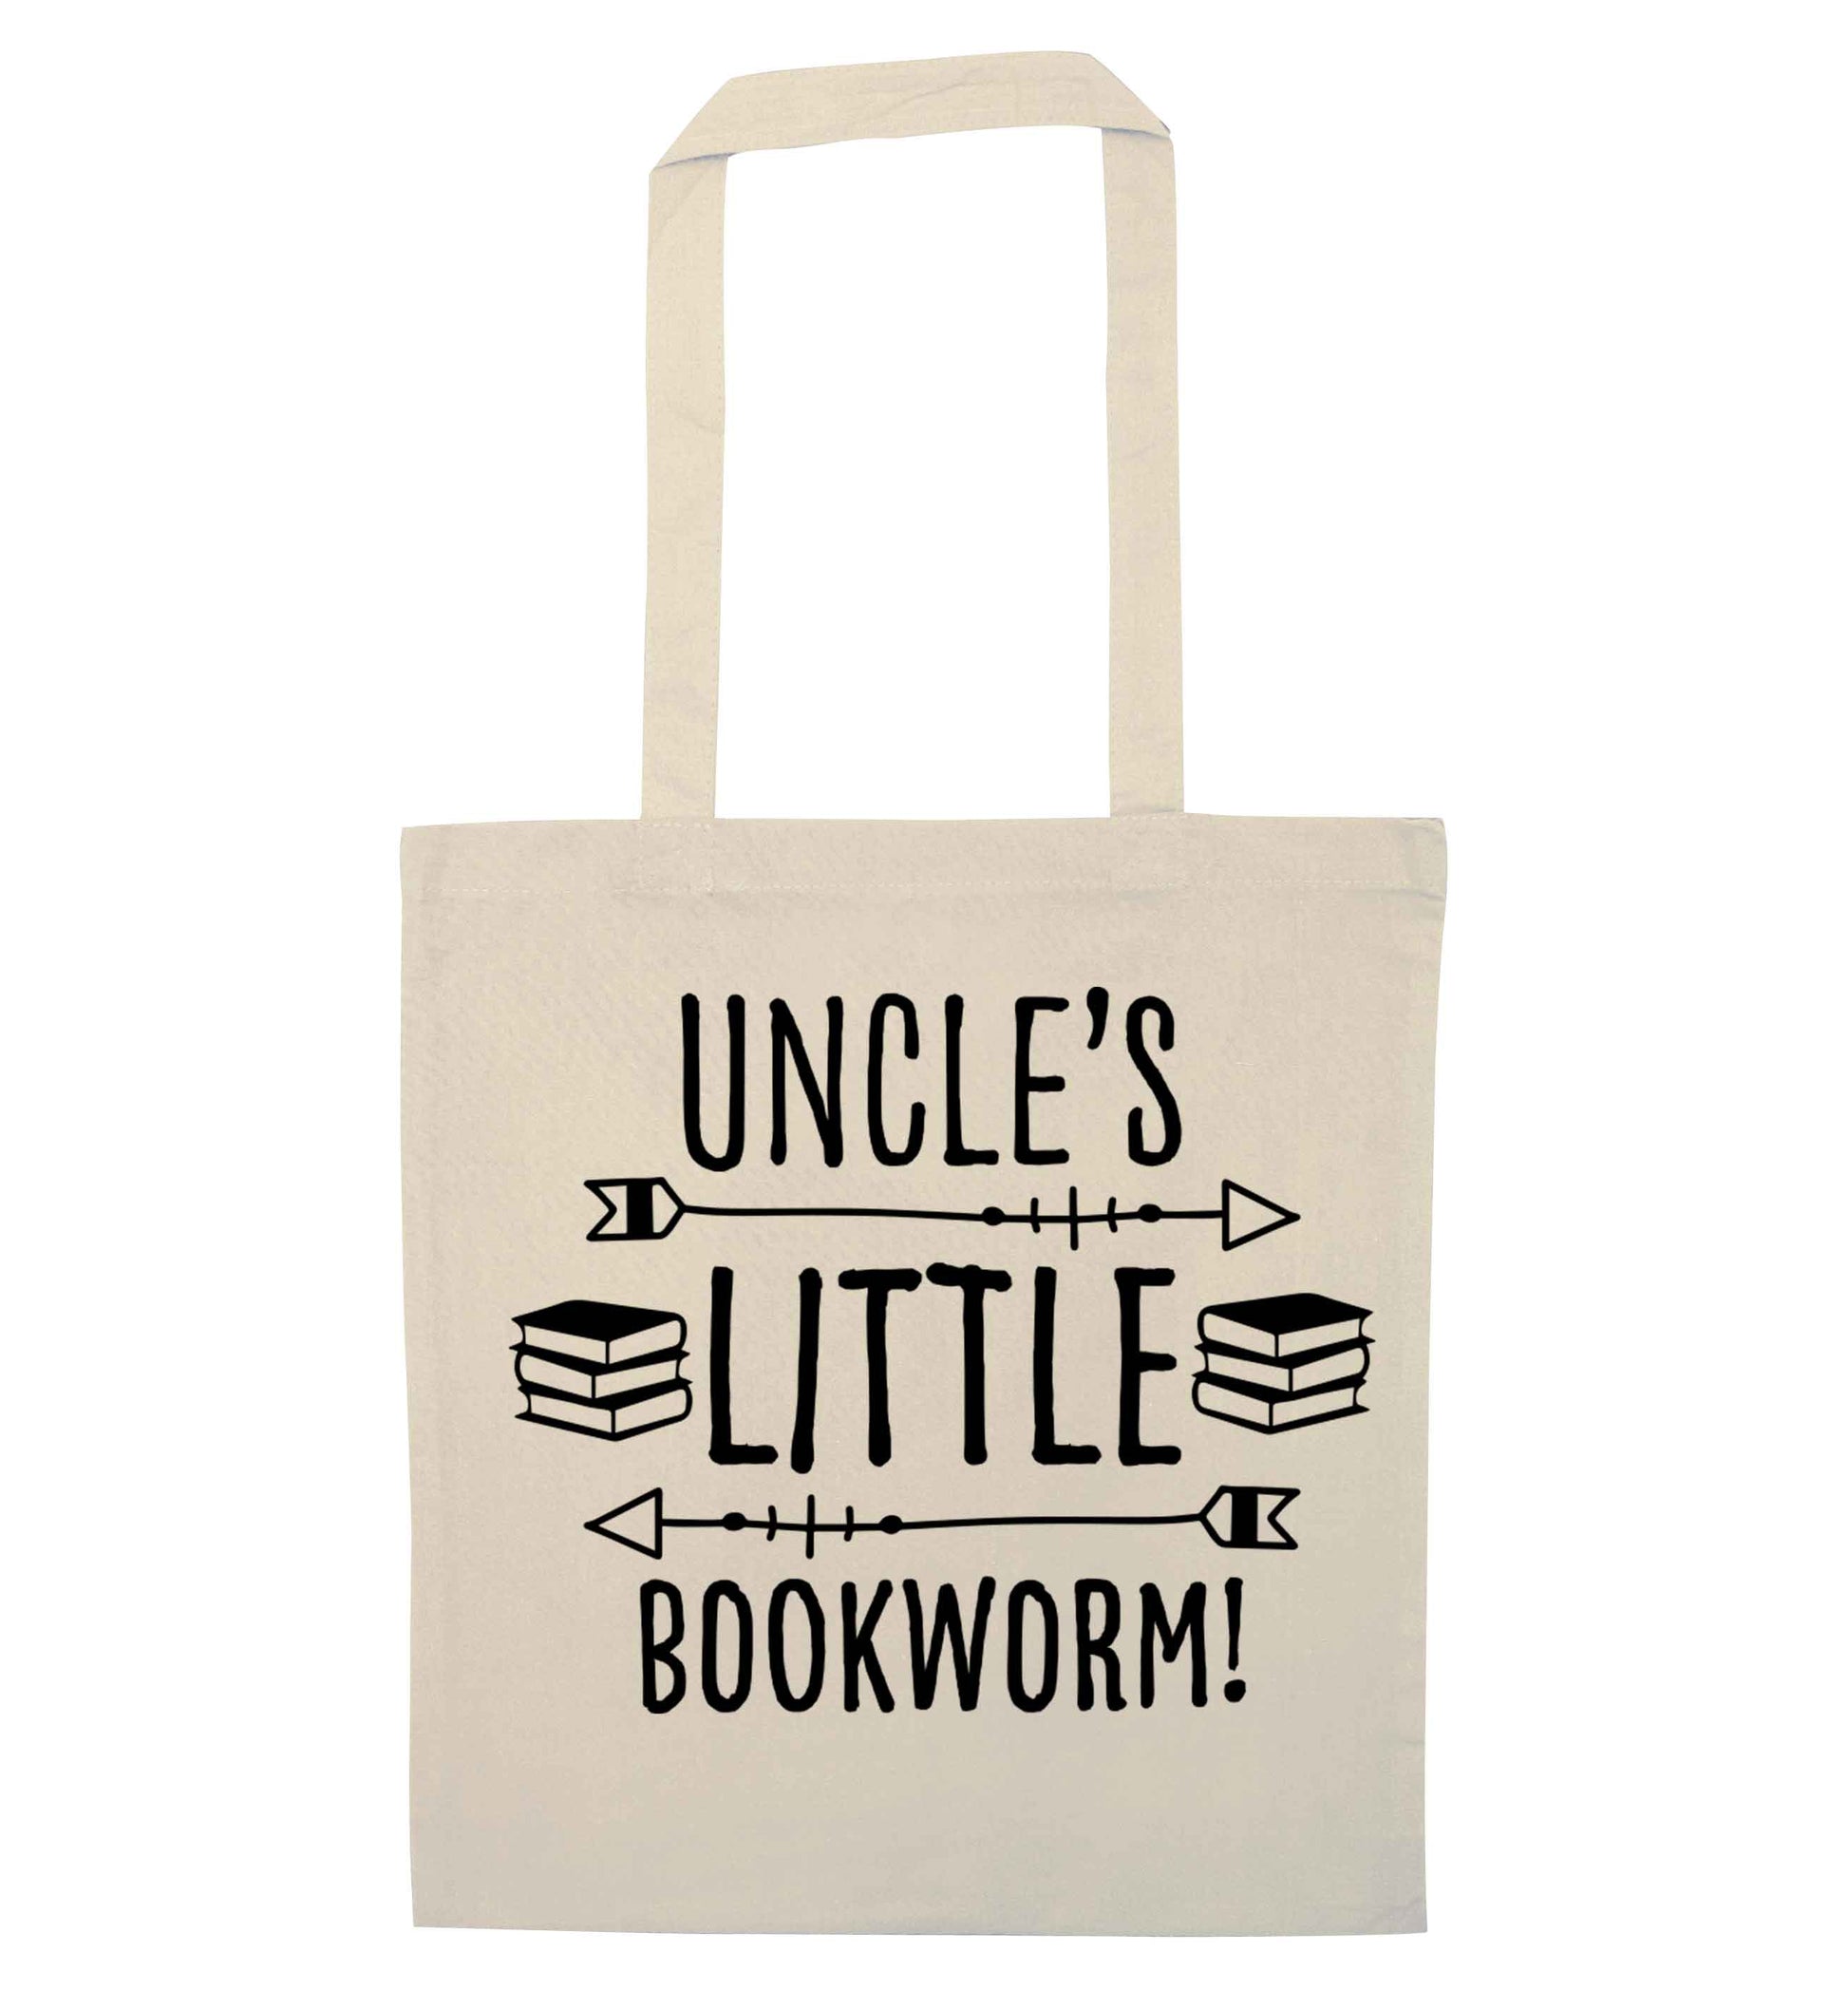 Uncle's little bookworm natural tote bag